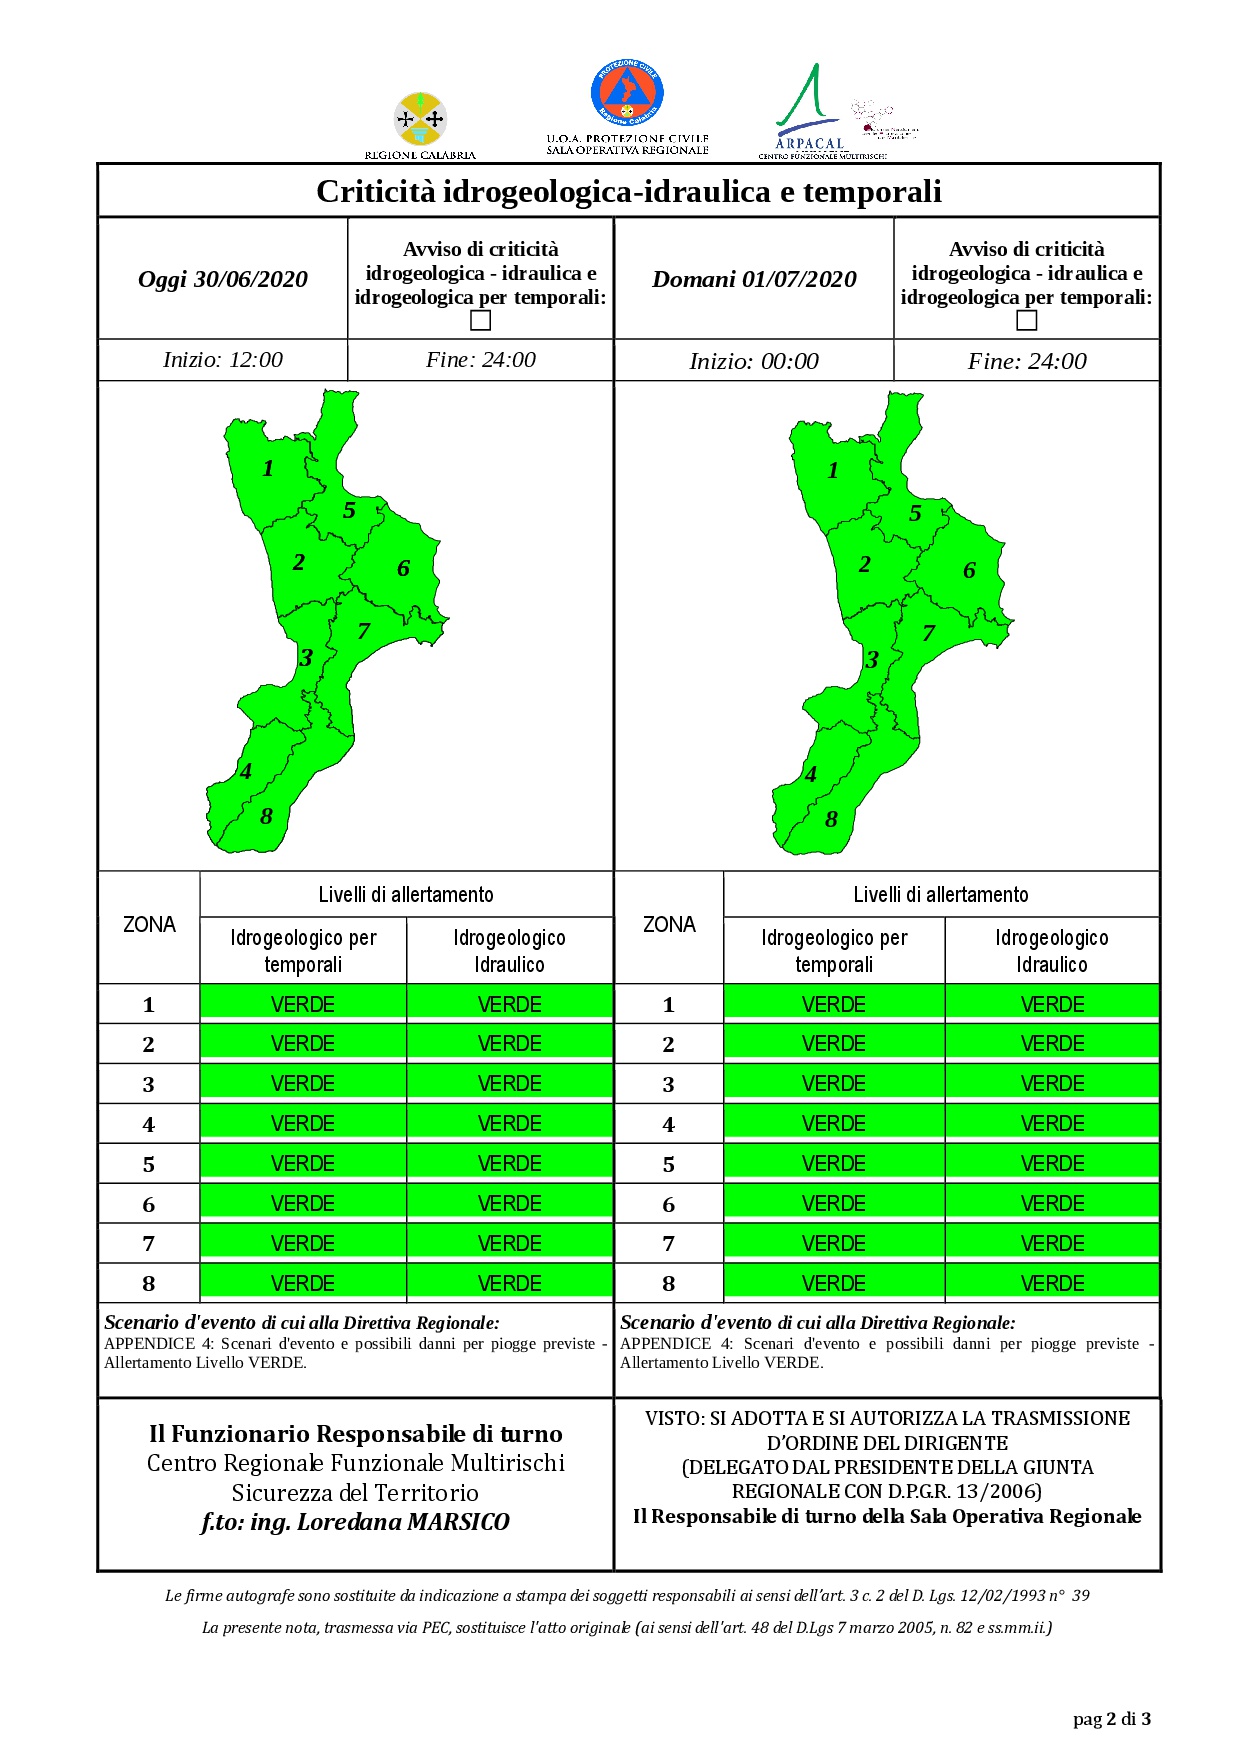 Criticità idrogeologica-idraulica e temporali in Calabria 30-06-2020